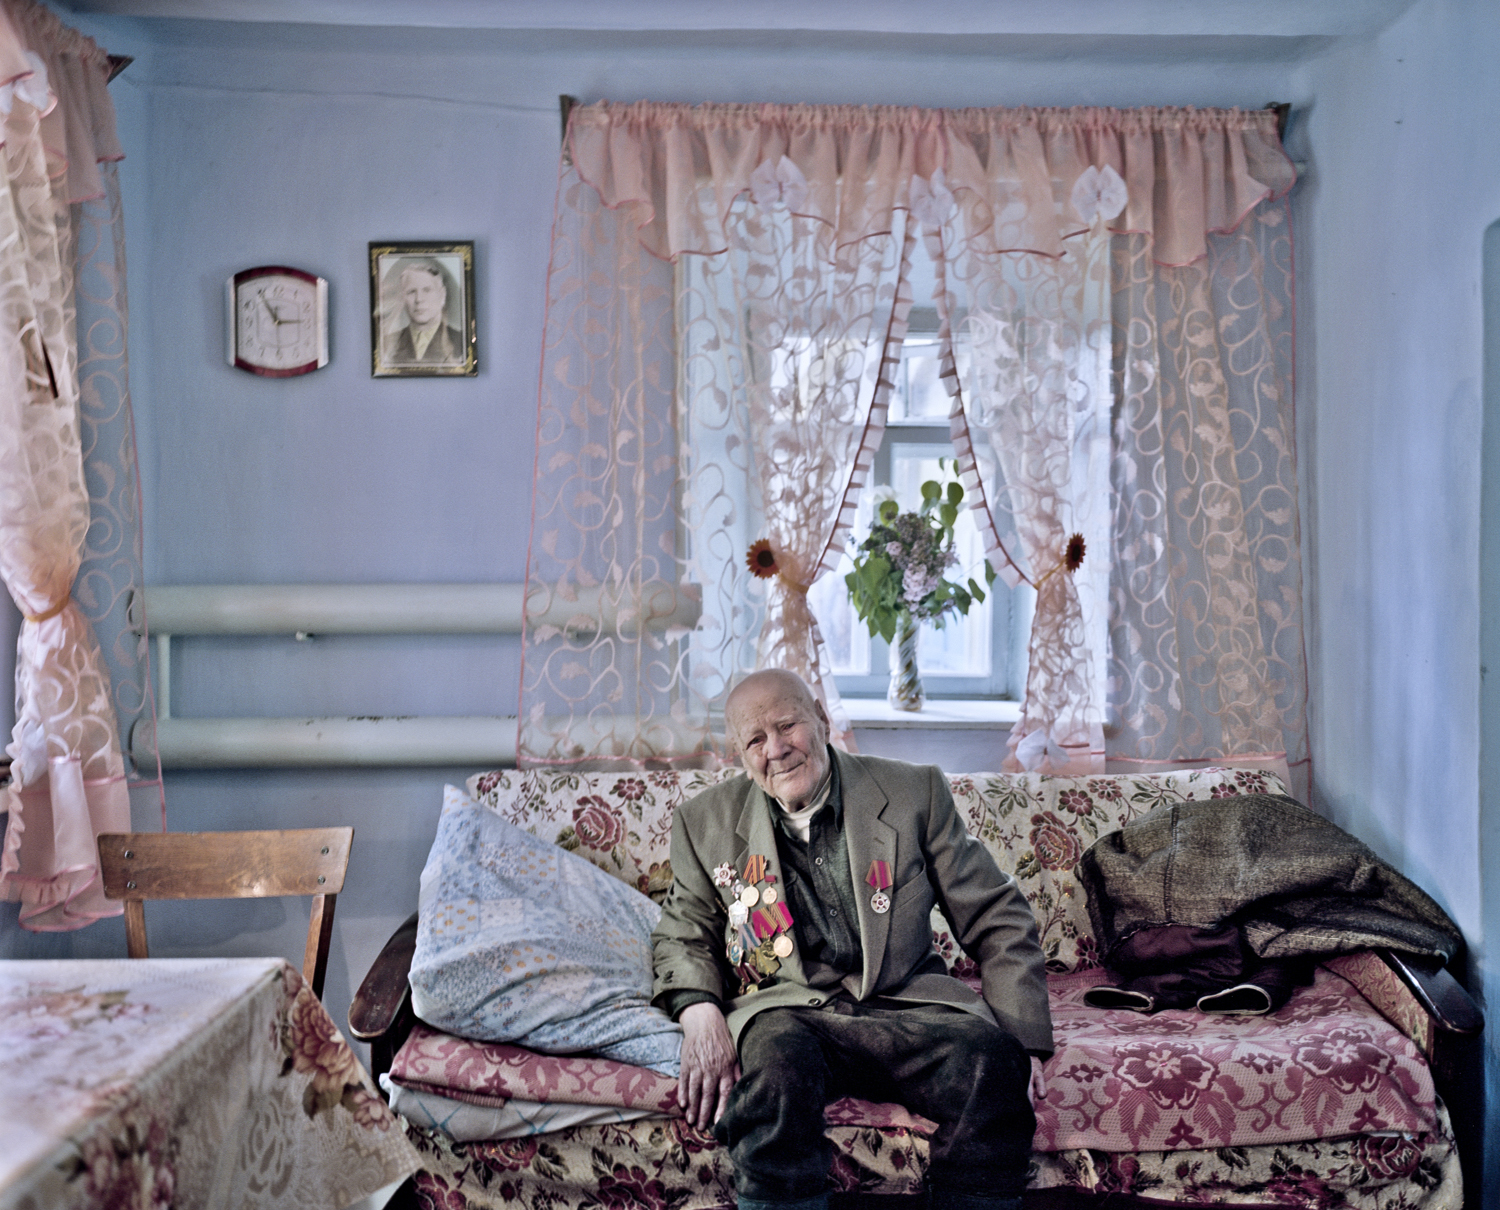 Bulgaz Mihail Mihajlovics is a 95 year old veteran in Tocmagium.